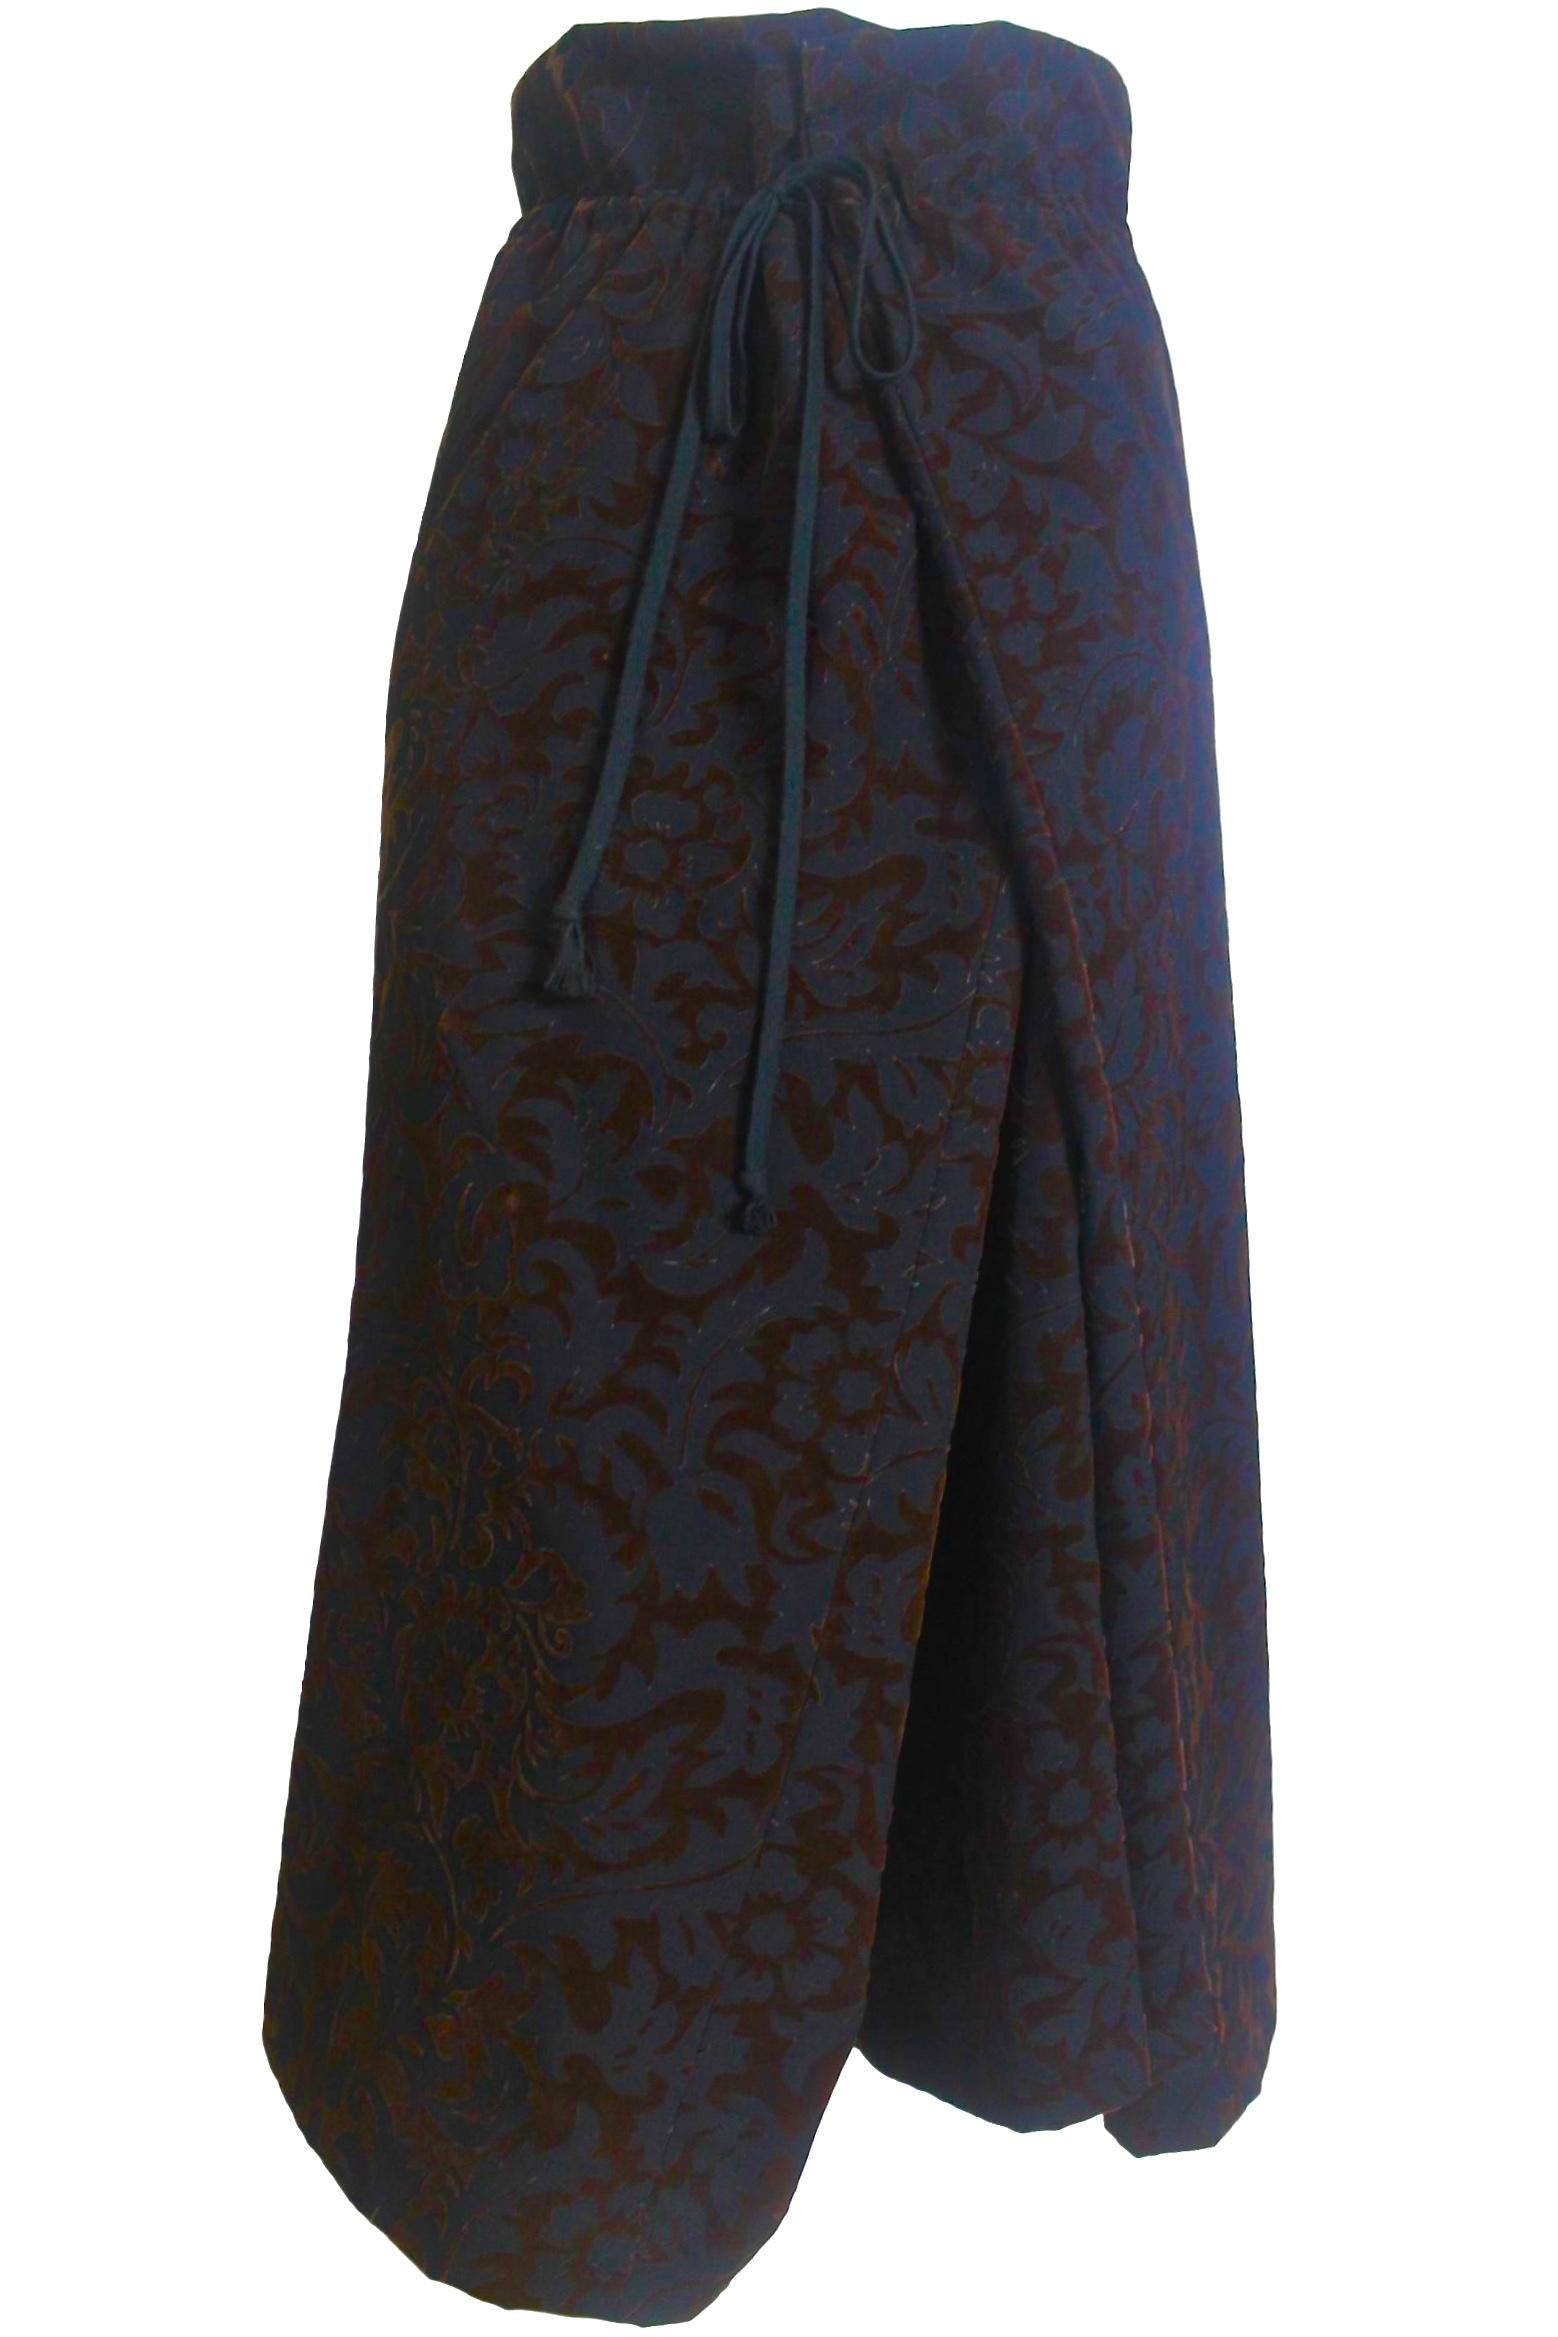 Comme des Garcons Flat Envelope Wool Skirt AD 1996 For Sale 6